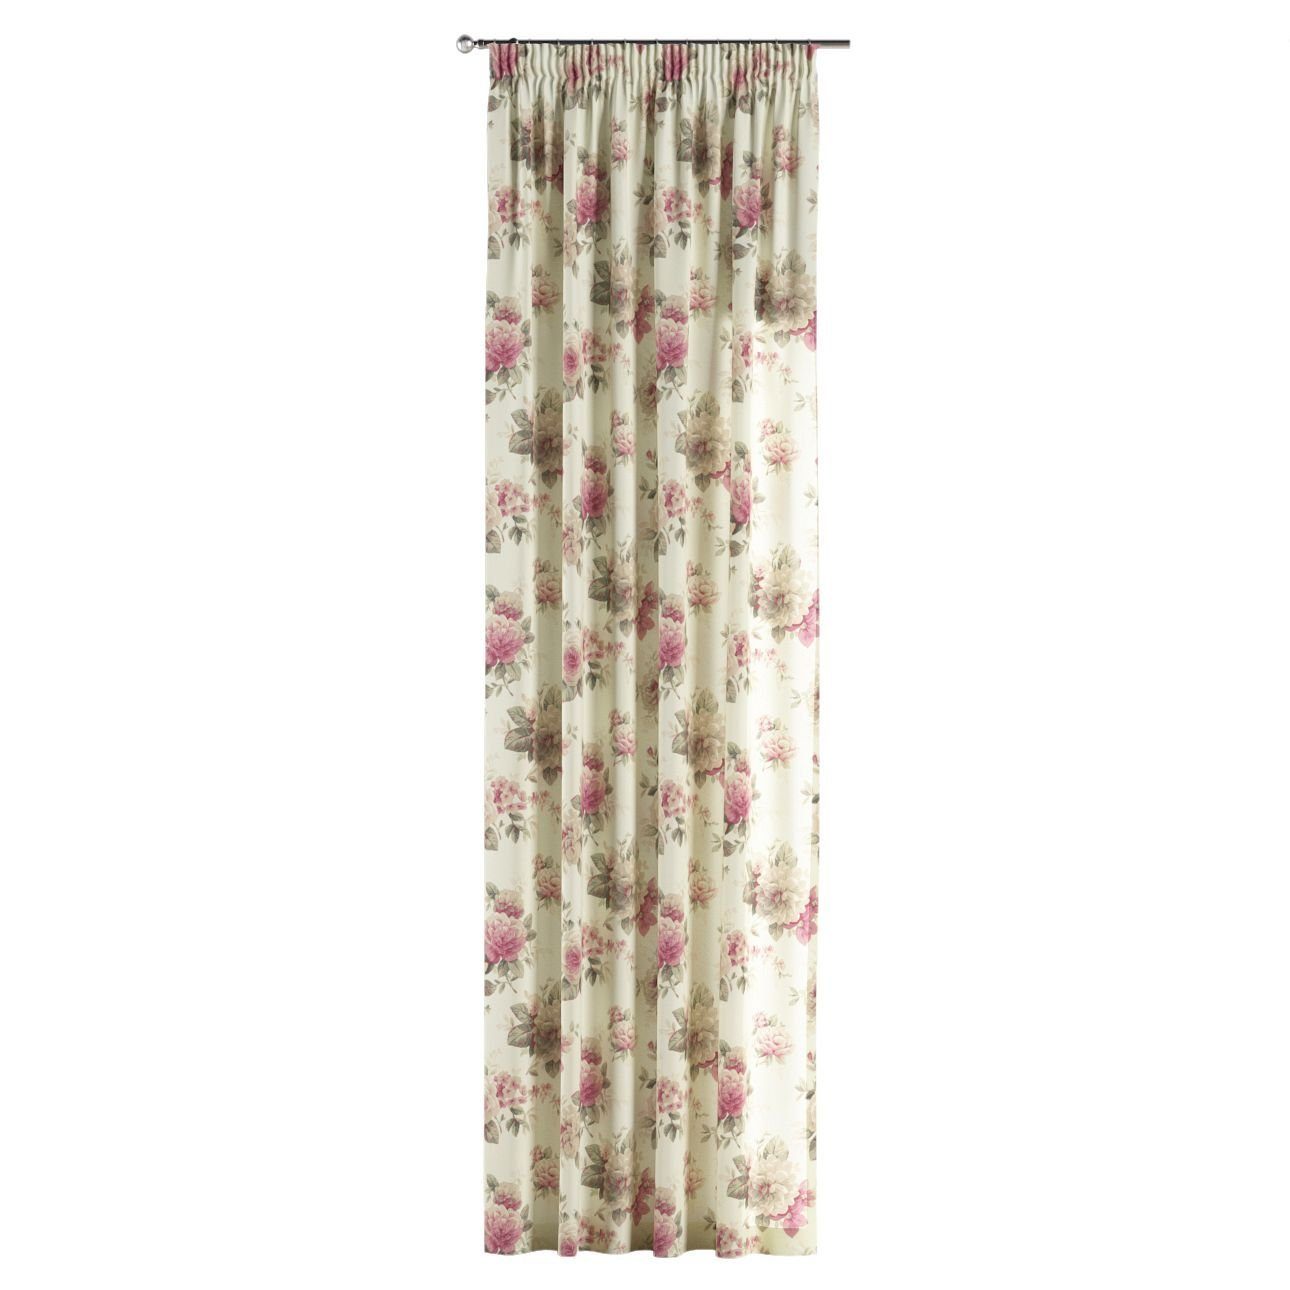 130 rosa beige- Vorhang cm, mit Vorhang Kräuselband Dekoria 100 Londres, x